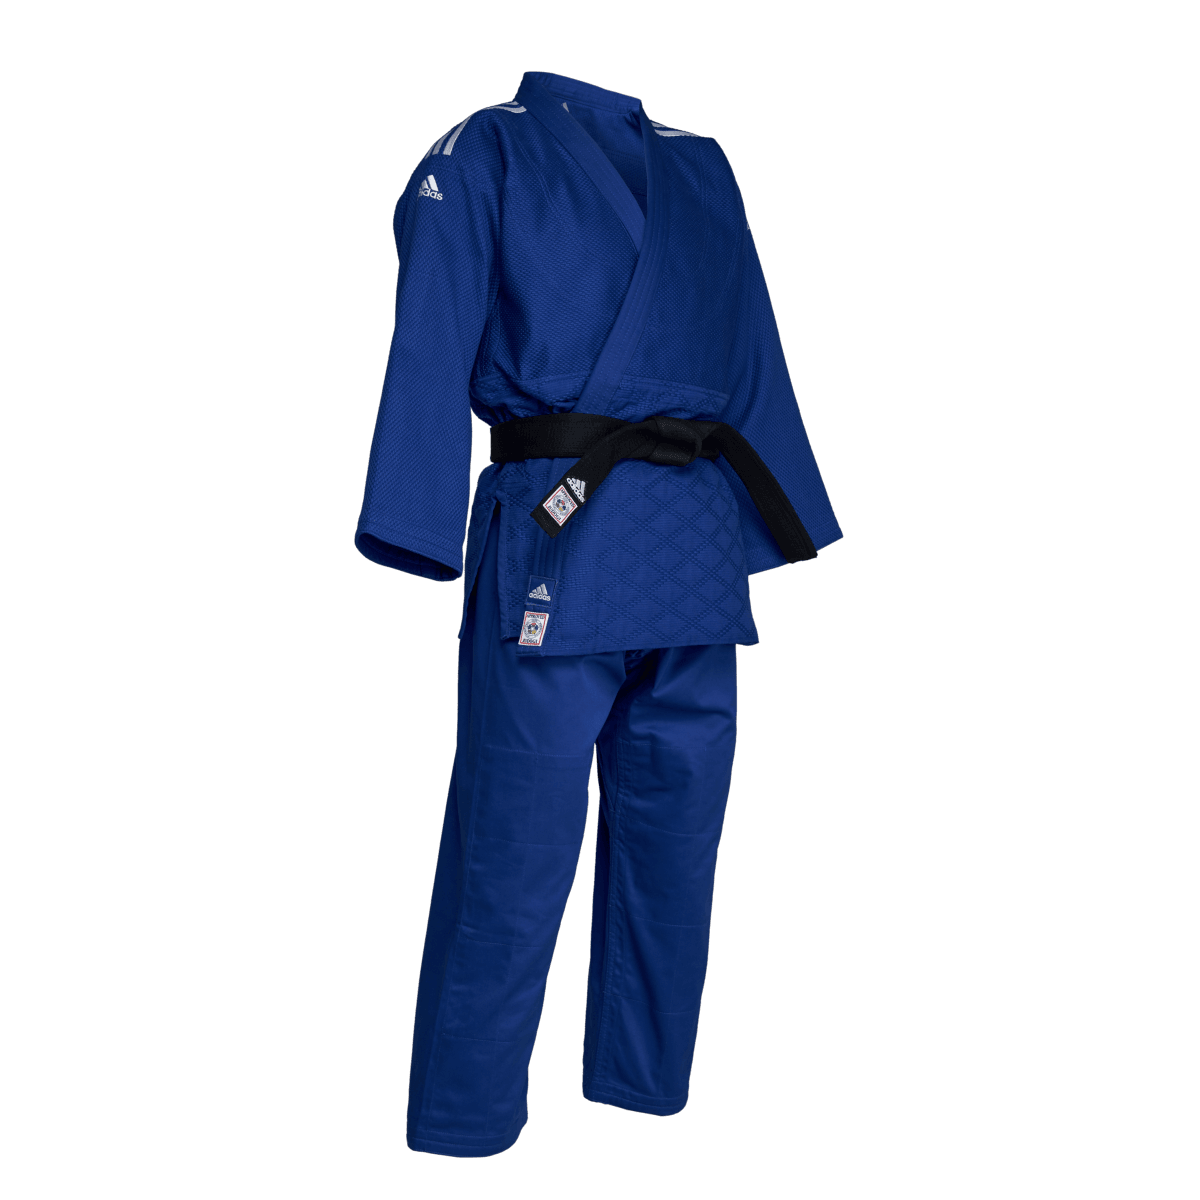 Kimono de Judo Adidas Champion III IJF - Bleu - Boutique des Arts Martiaux et Sports de Combat